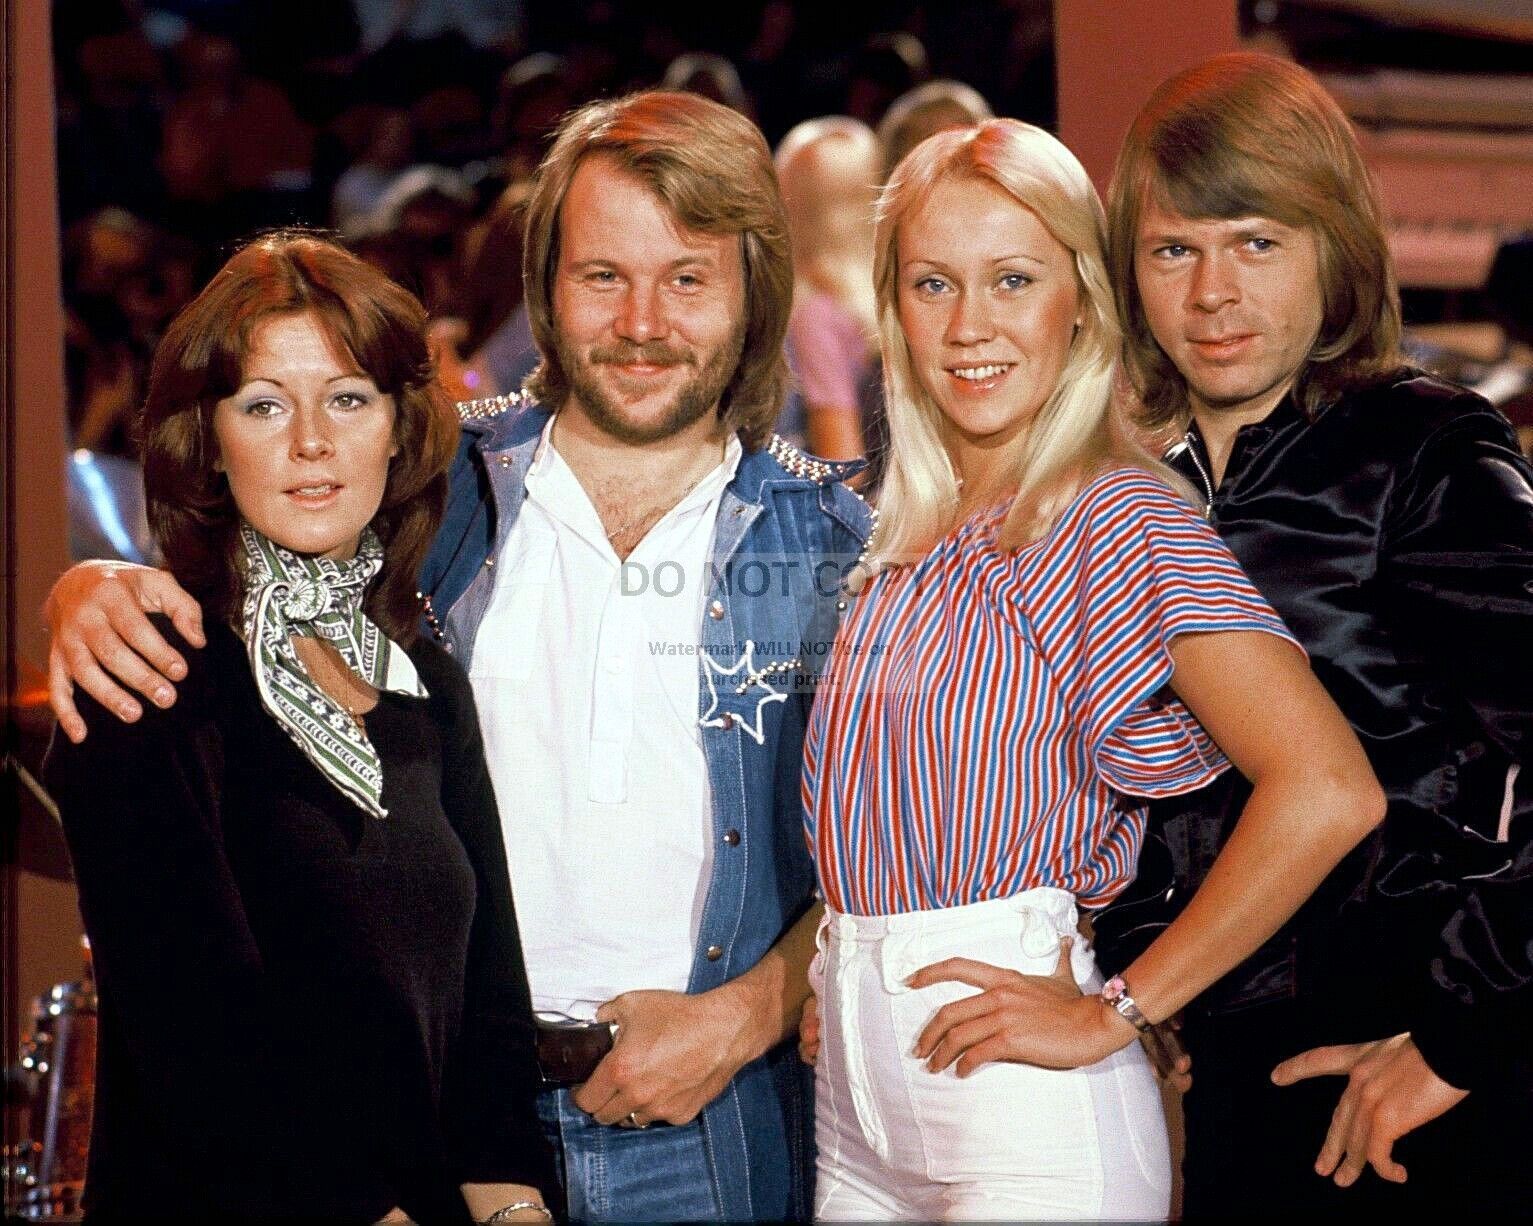 ABBA LEGENDARY SWEDISH POP MUSIC GROUP - 8X10 PUBLICITY PHOTO (RT763)